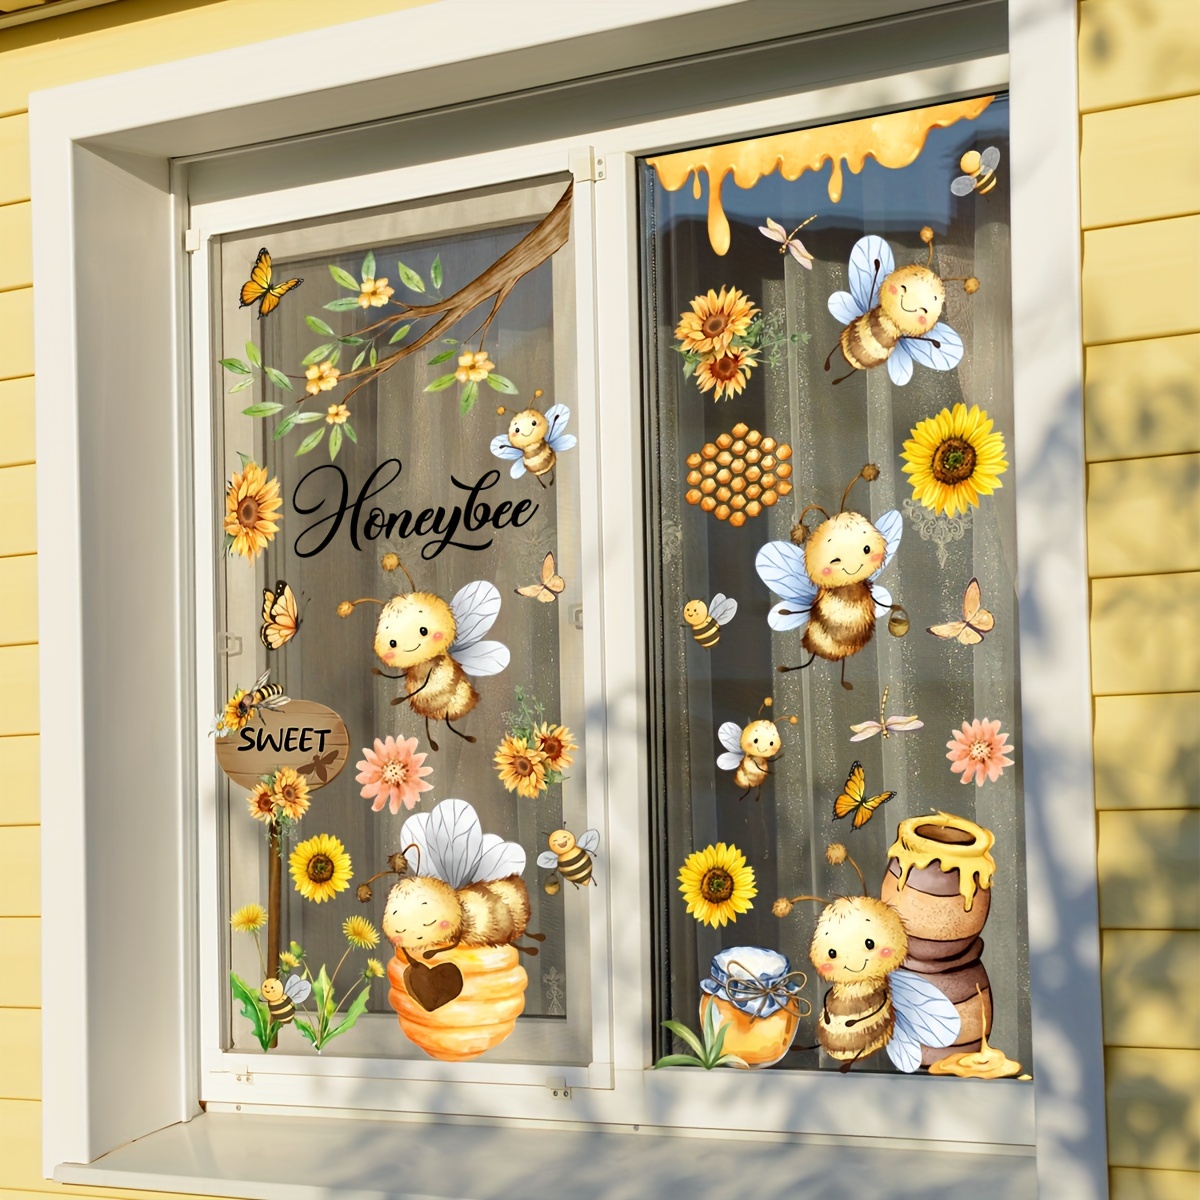 

Set, Spring Decoration Bee Festival, Little Bee Honey Jar Butterfly Sunflower Static Cling Window Decoration Glass Sticker